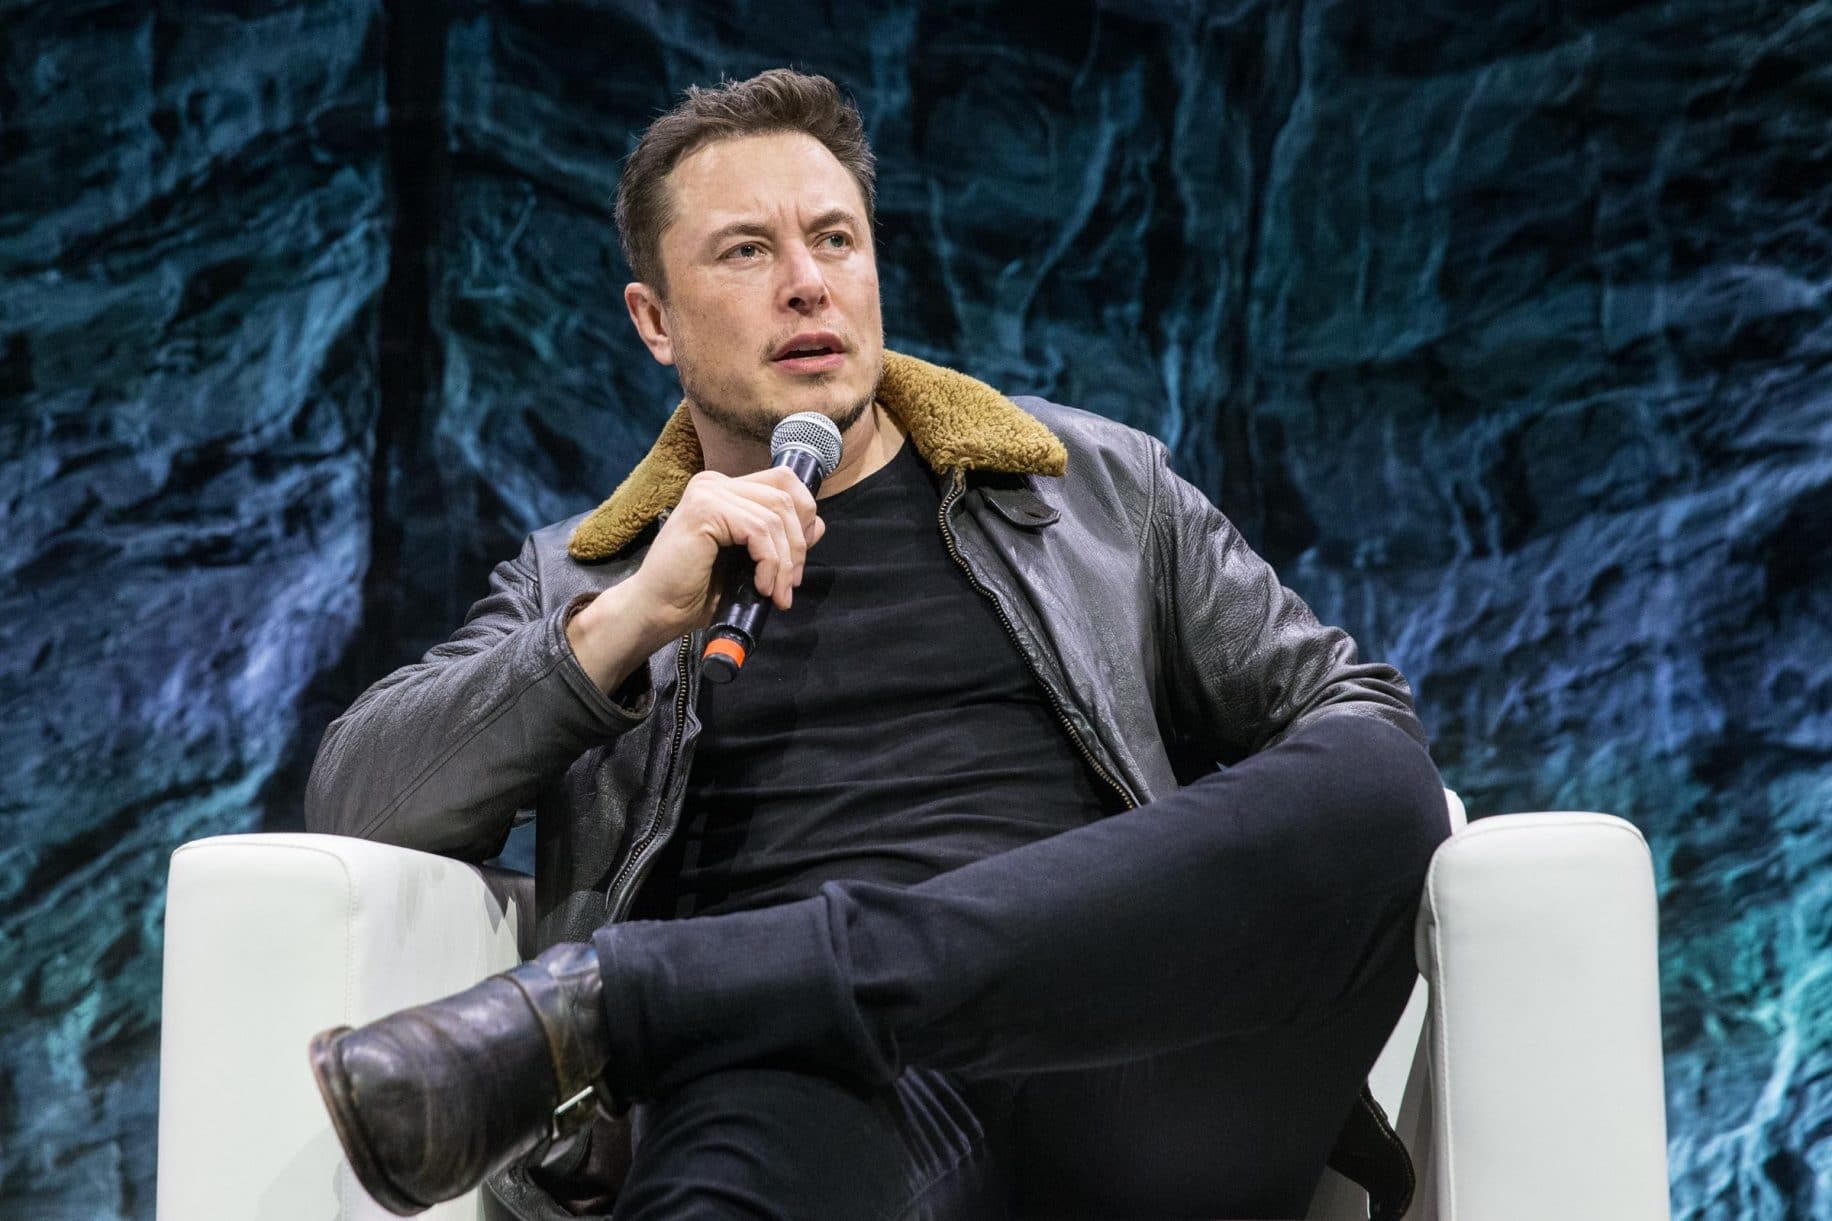 Tesla formally adds ‘Technoking’ to Elon Musk’s title